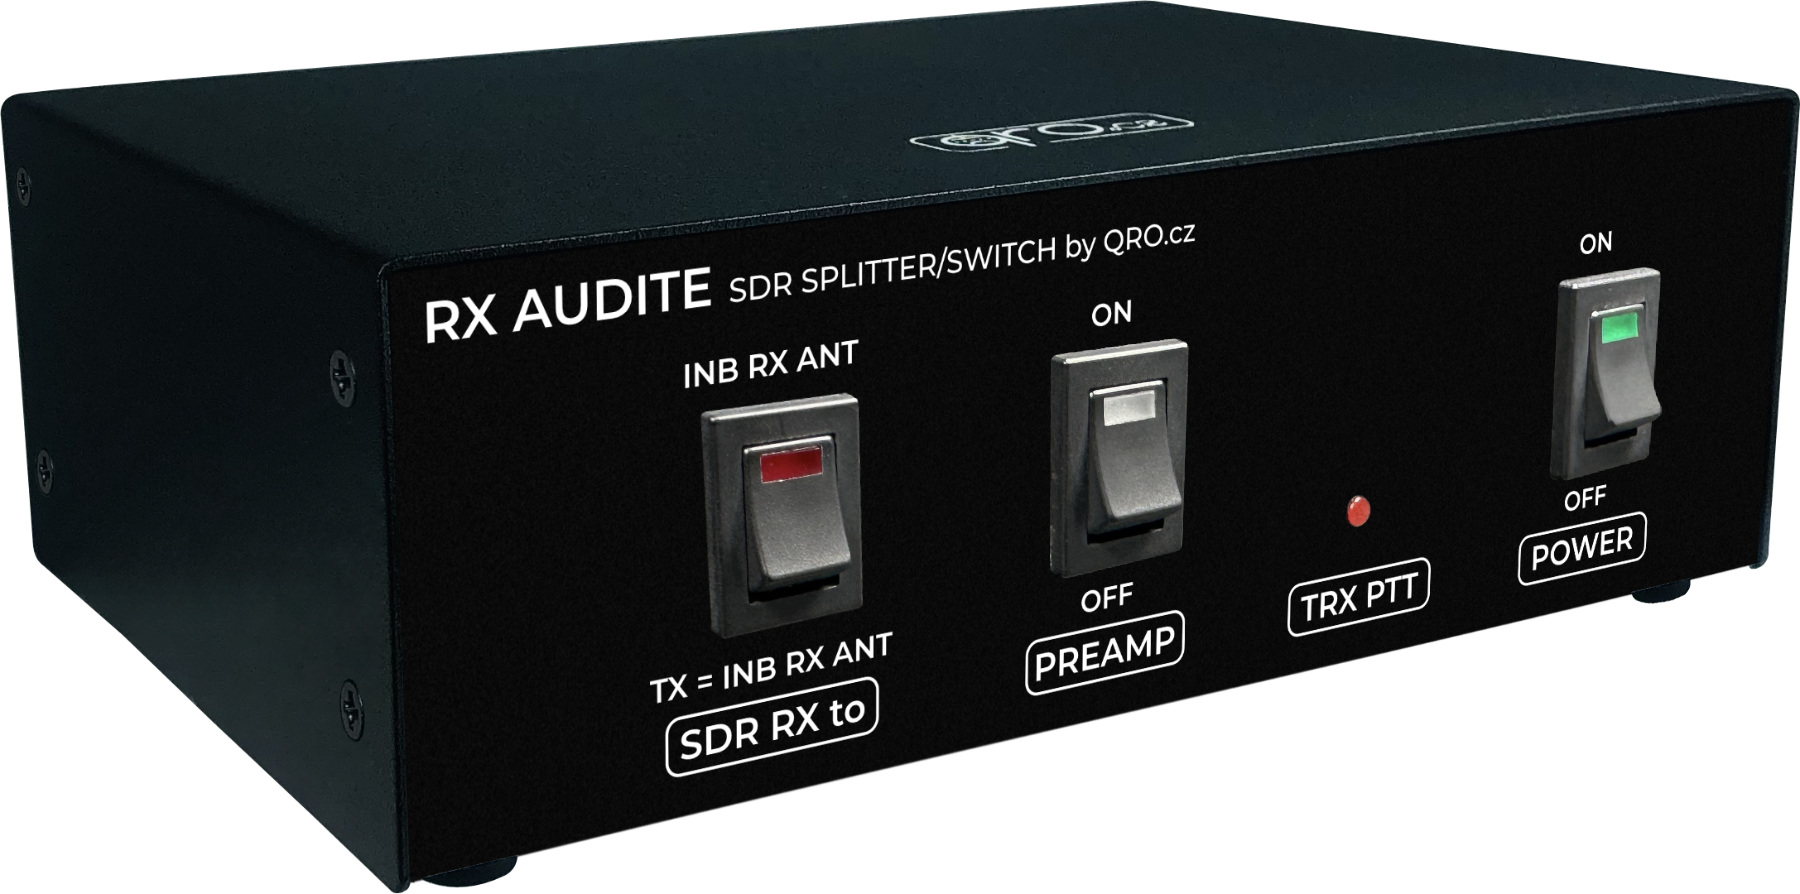 rx audite sdr splitter switch by qro.cz hamparts.shop